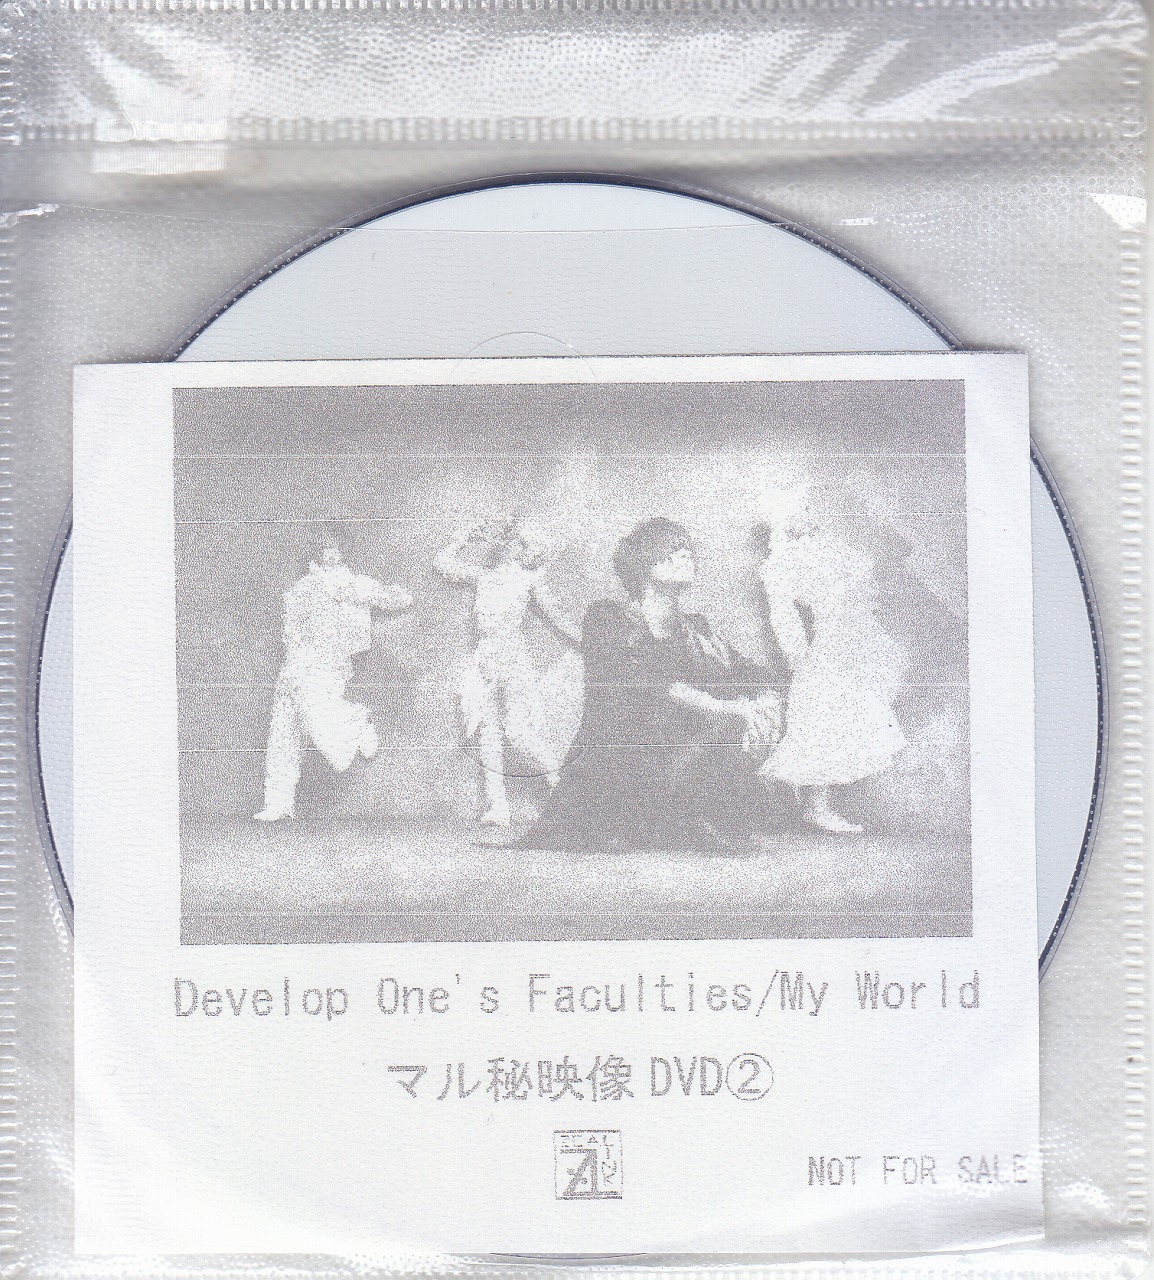 Develop One's Faculties ( ディヴェロプ ワンス ファーカルティース )  の DVD 【ZEAL LINK】My World マル秘映像DVD②